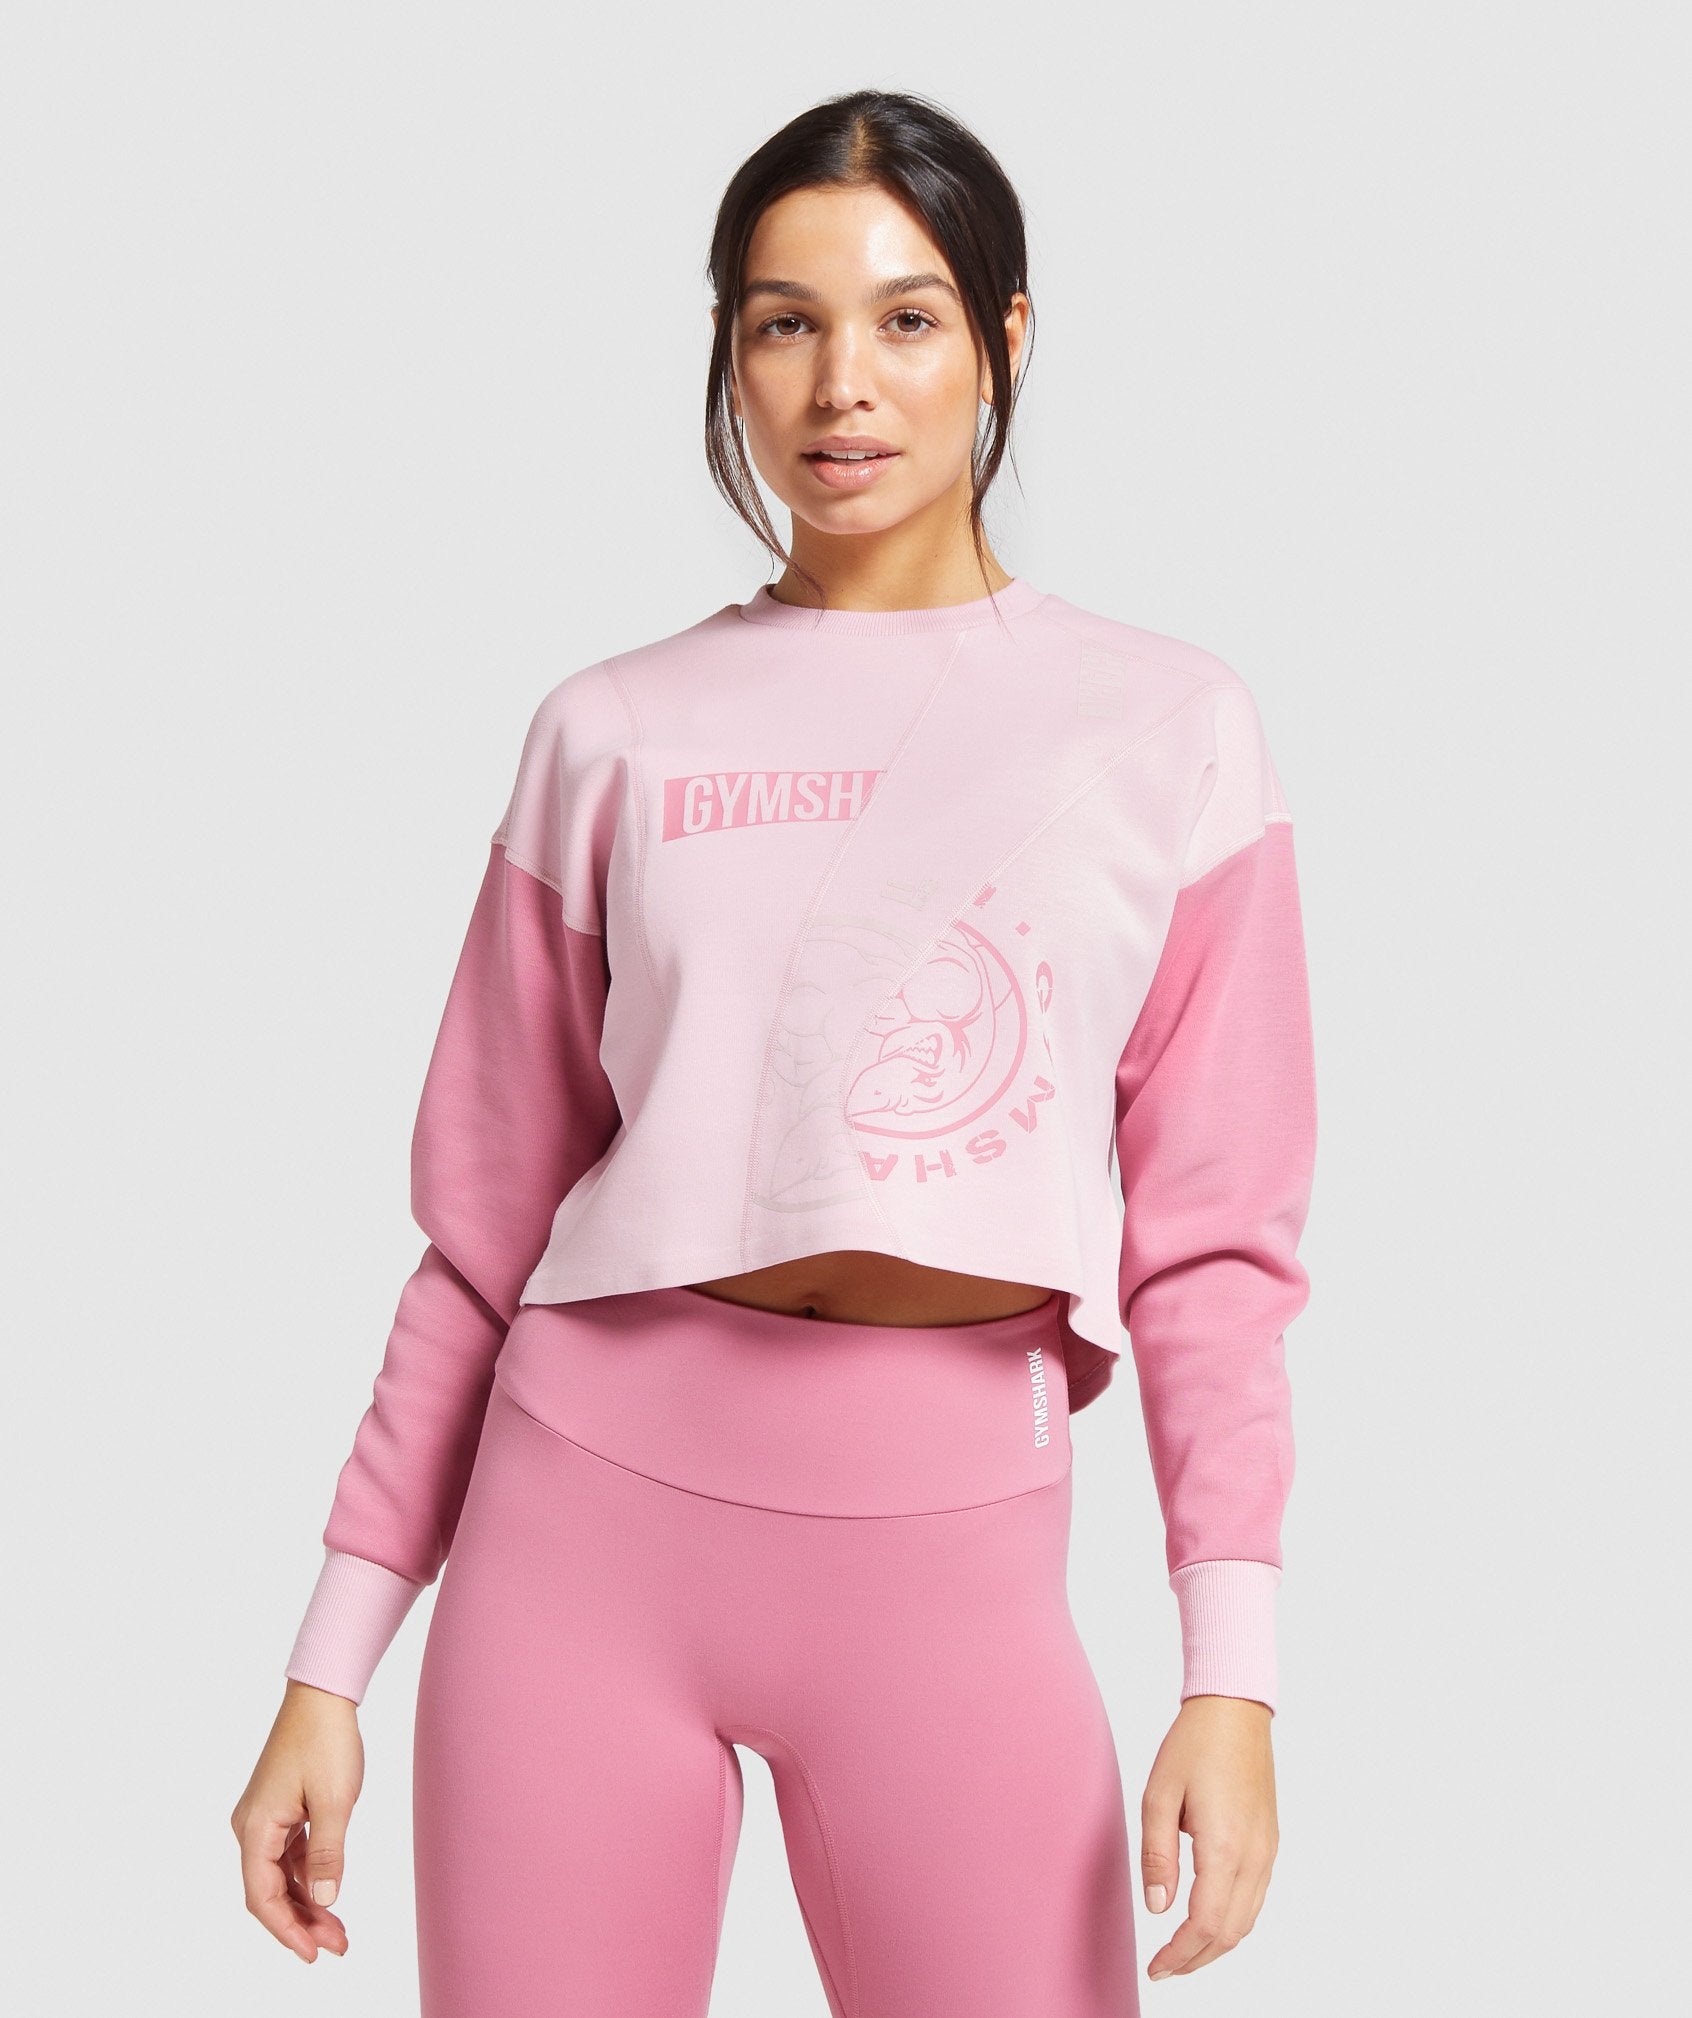 Rewind Sweater in Pink - view 1